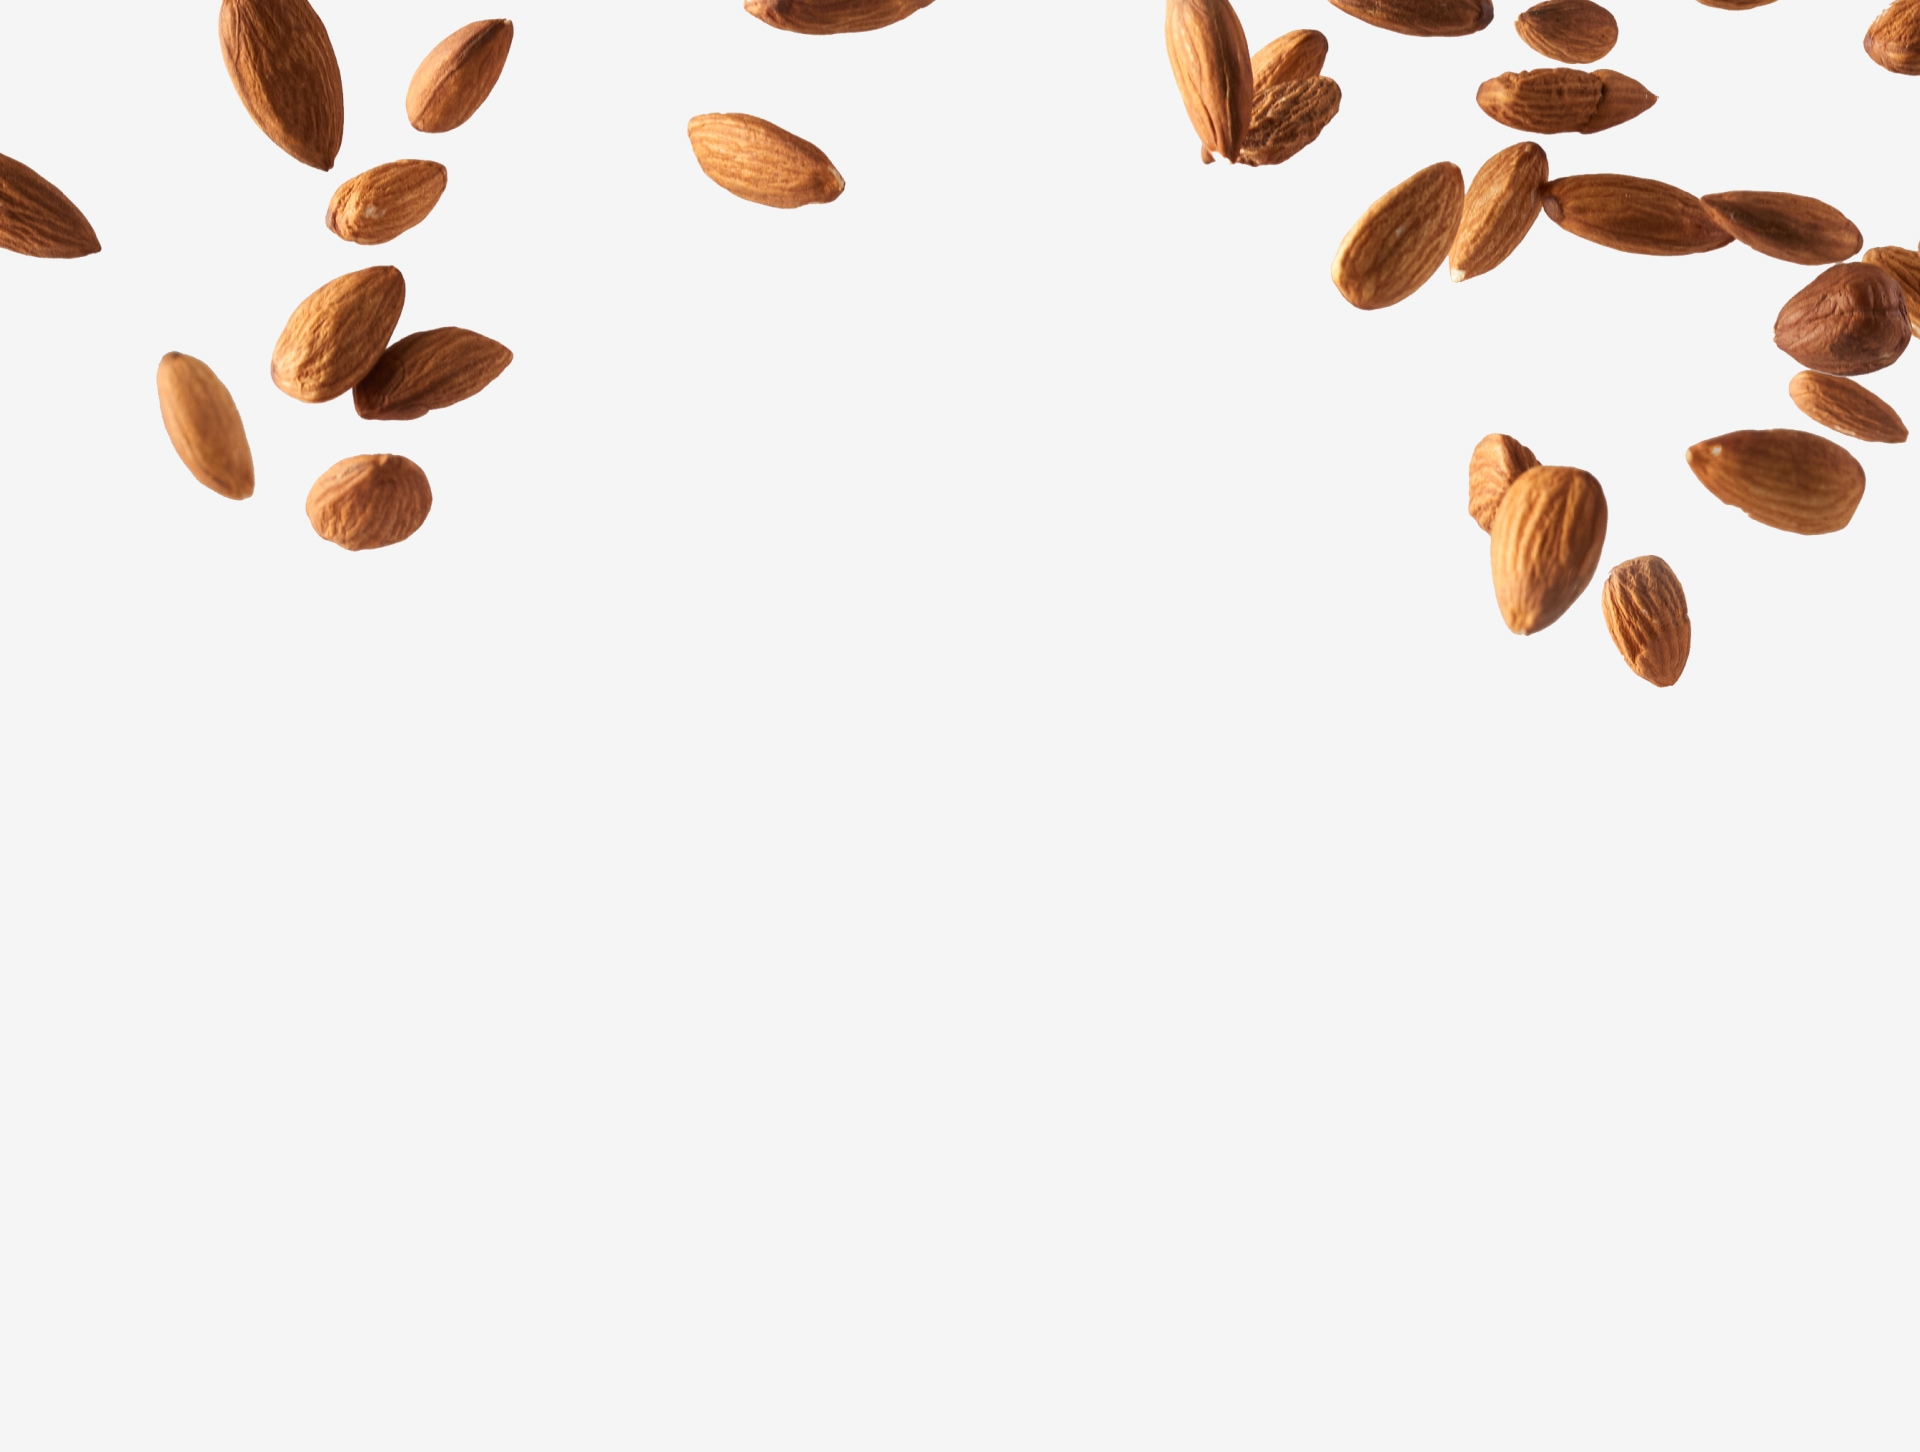 Leading almond ingredient supplier